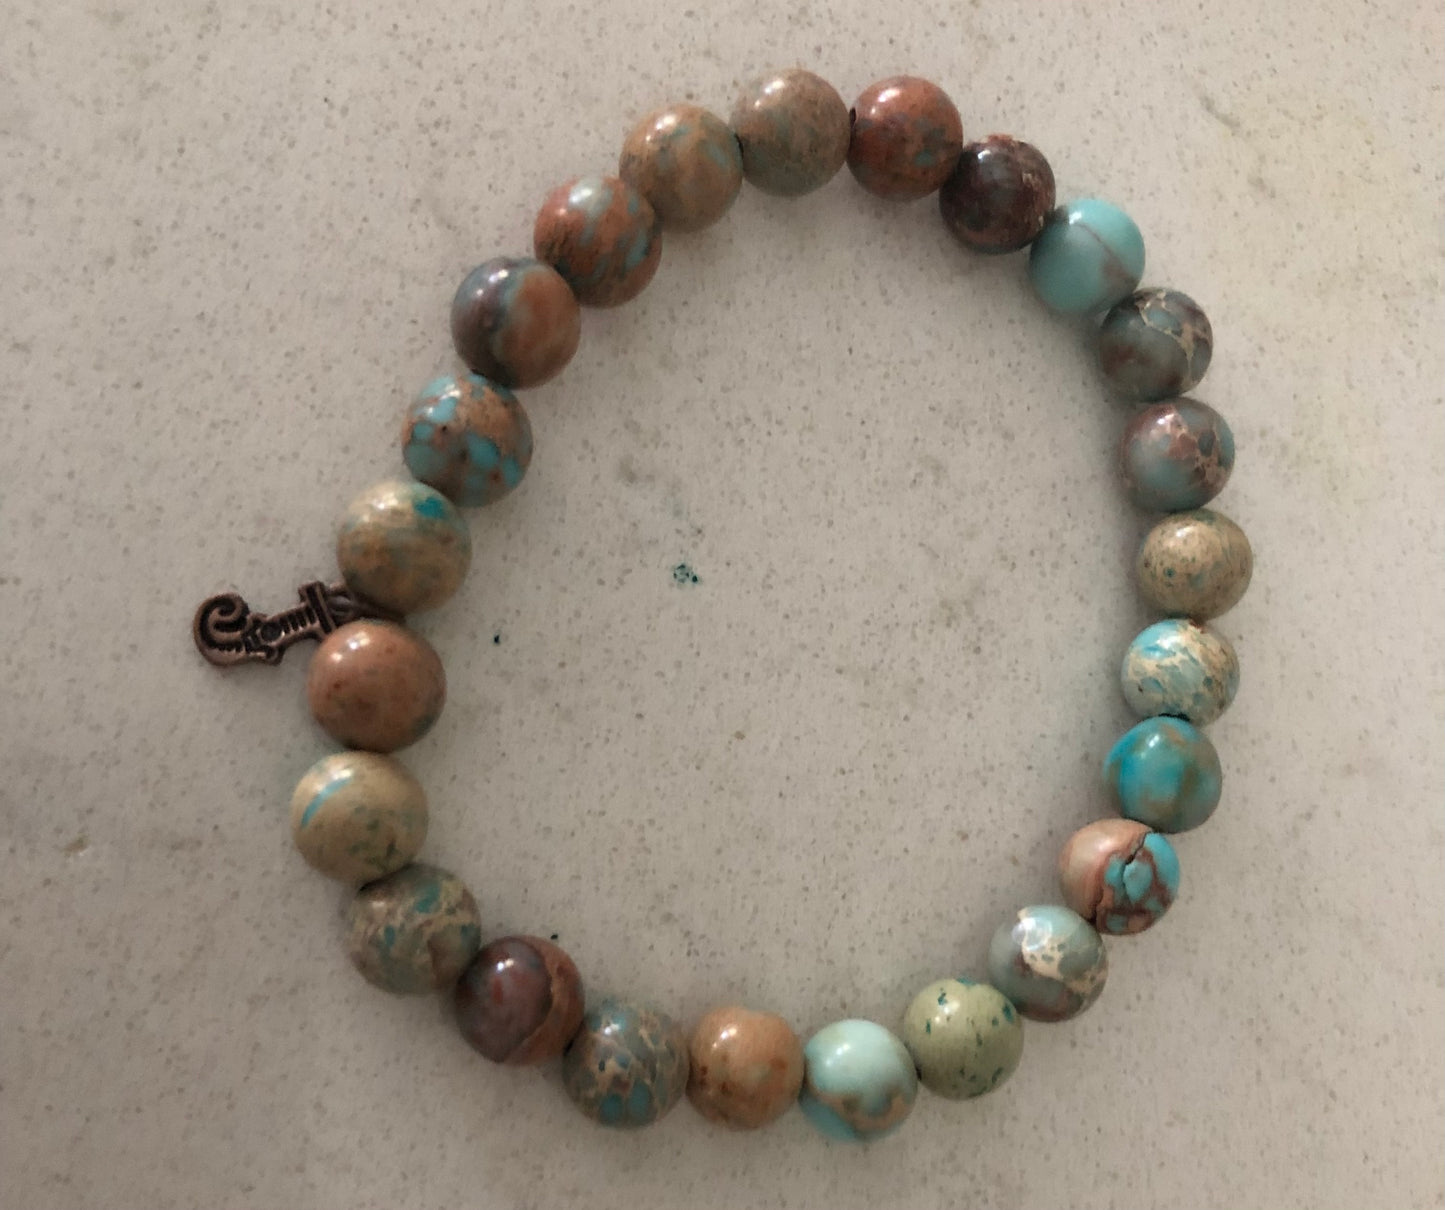 Natural turquoise stone bracelet